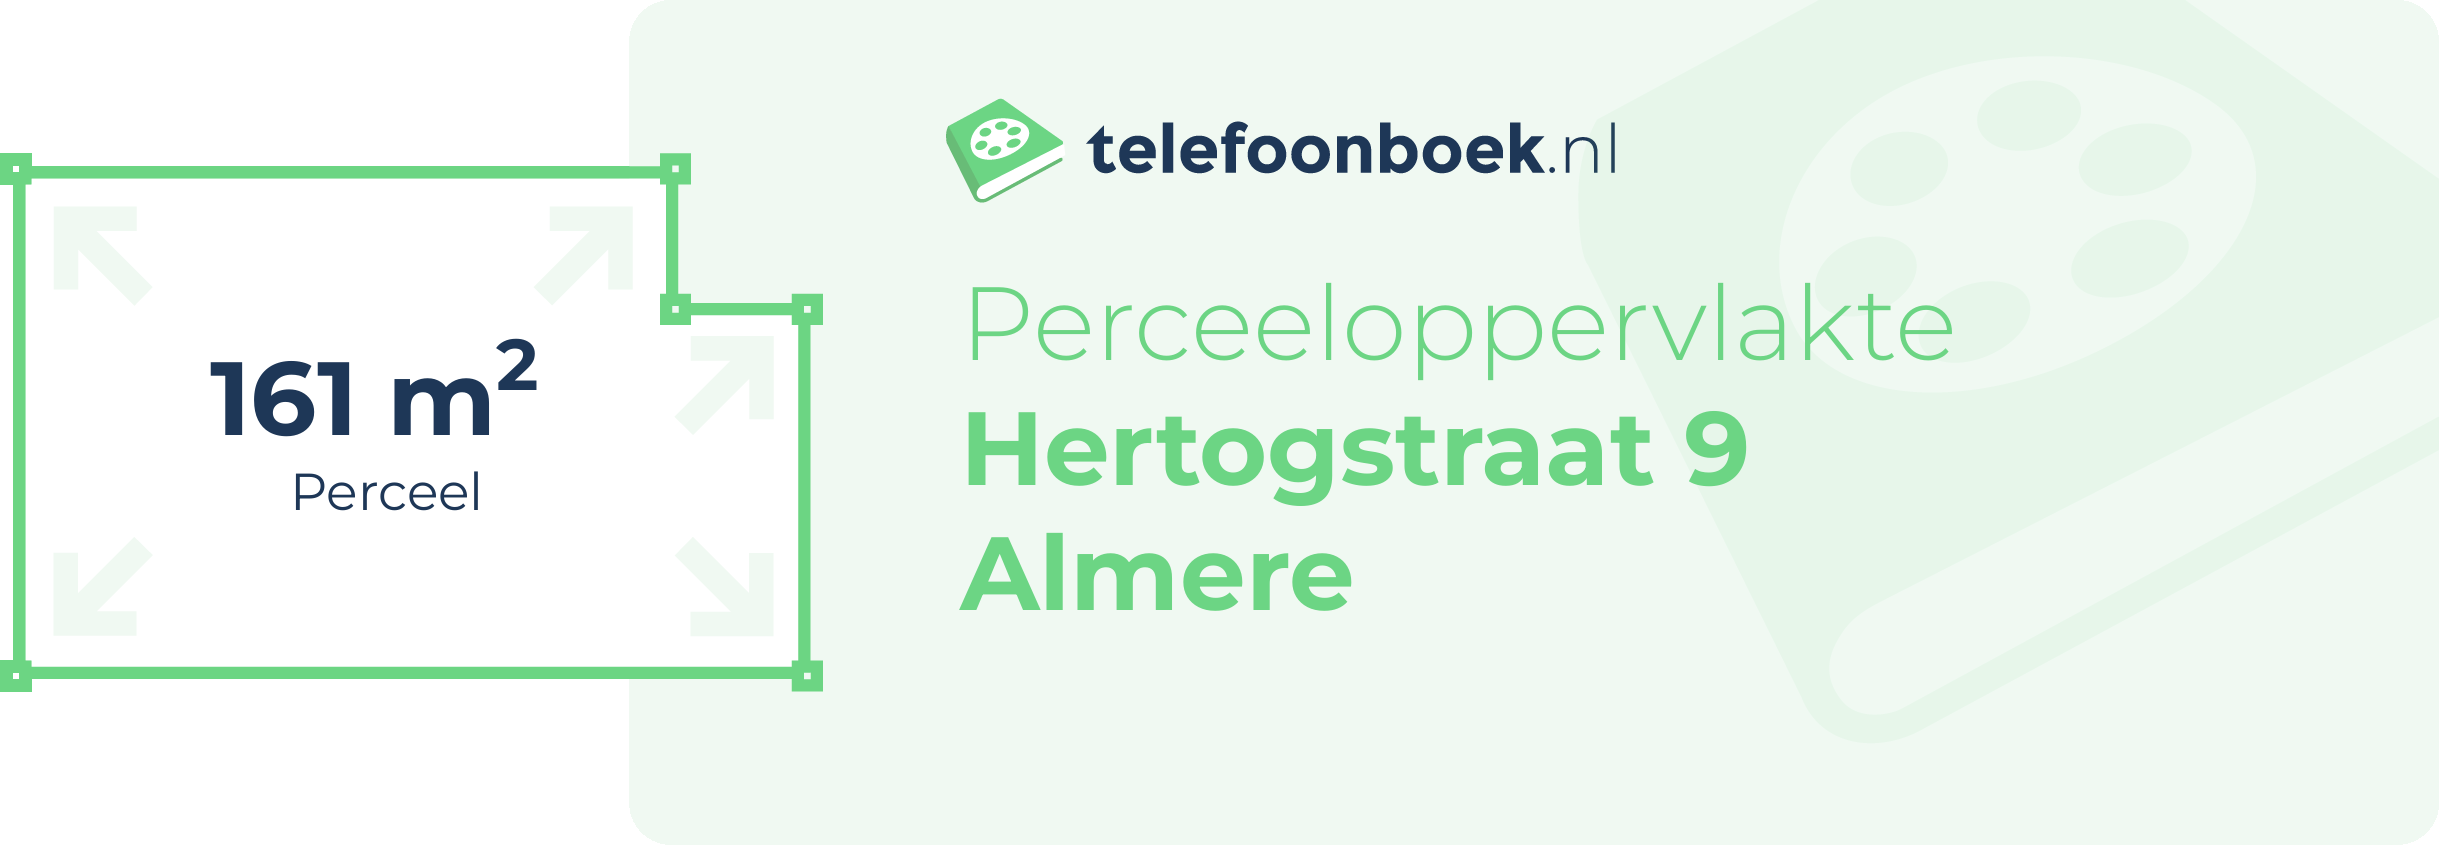 Perceeloppervlakte Hertogstraat 9 Almere